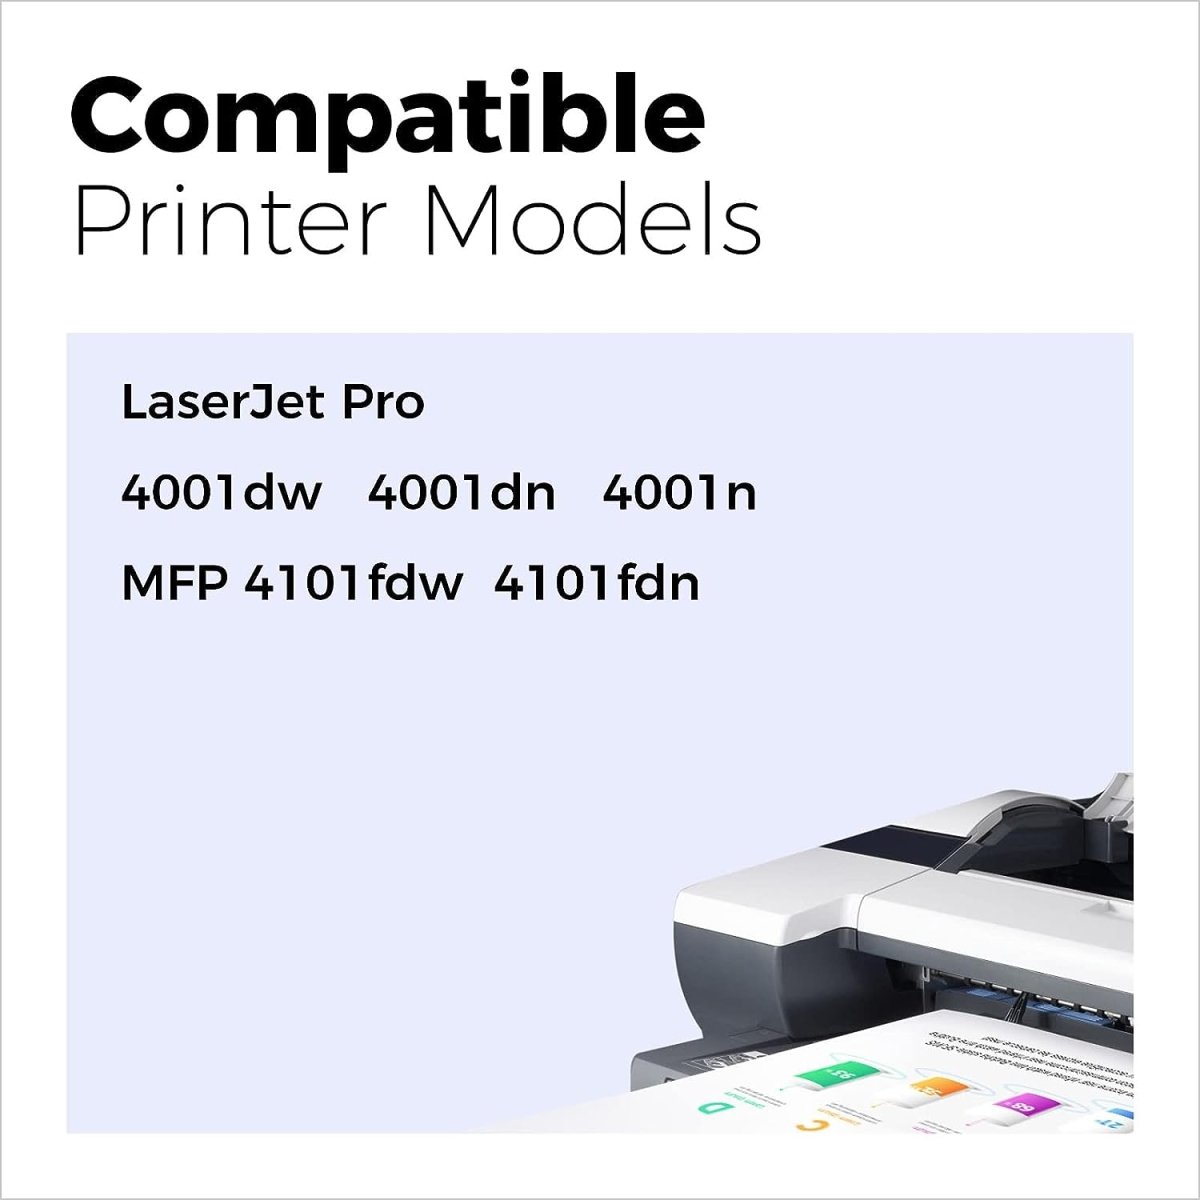 Compatible HP 148X W1480X Toner Cartridge Black High Yield 1-Pack - Linford Office:Printer Ink & Toner Cartridge